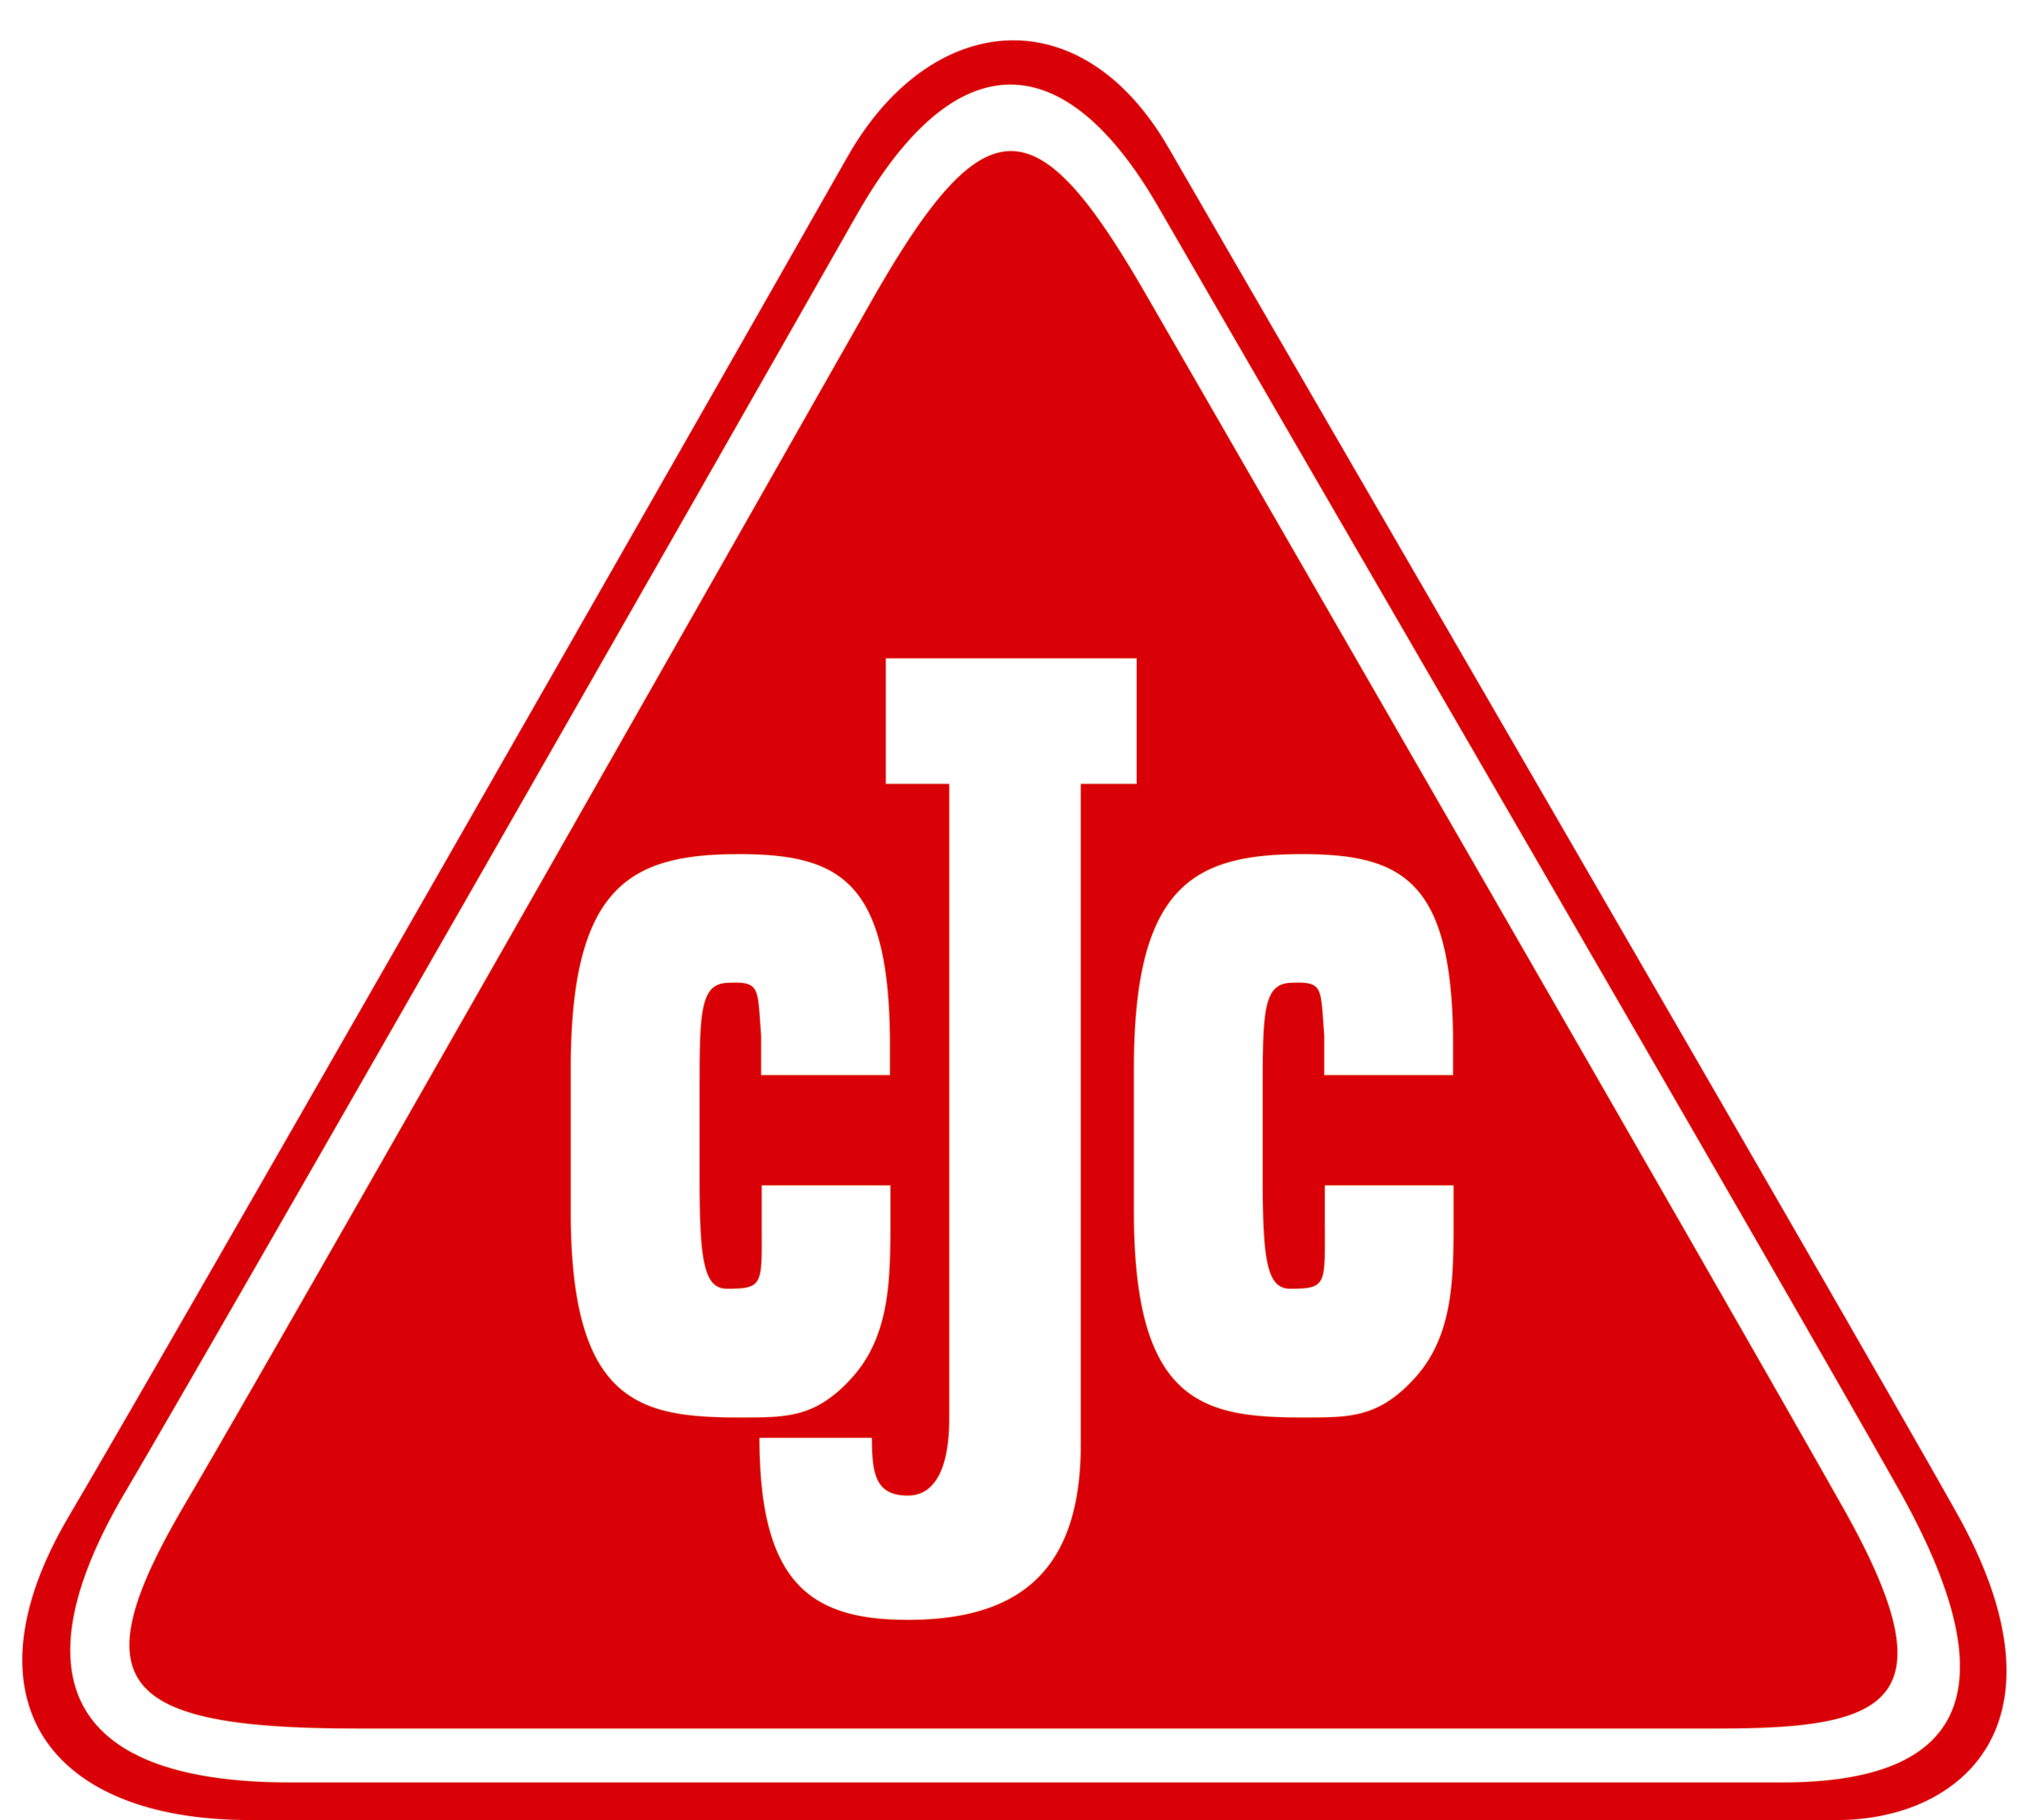 CJC logo_CMYK